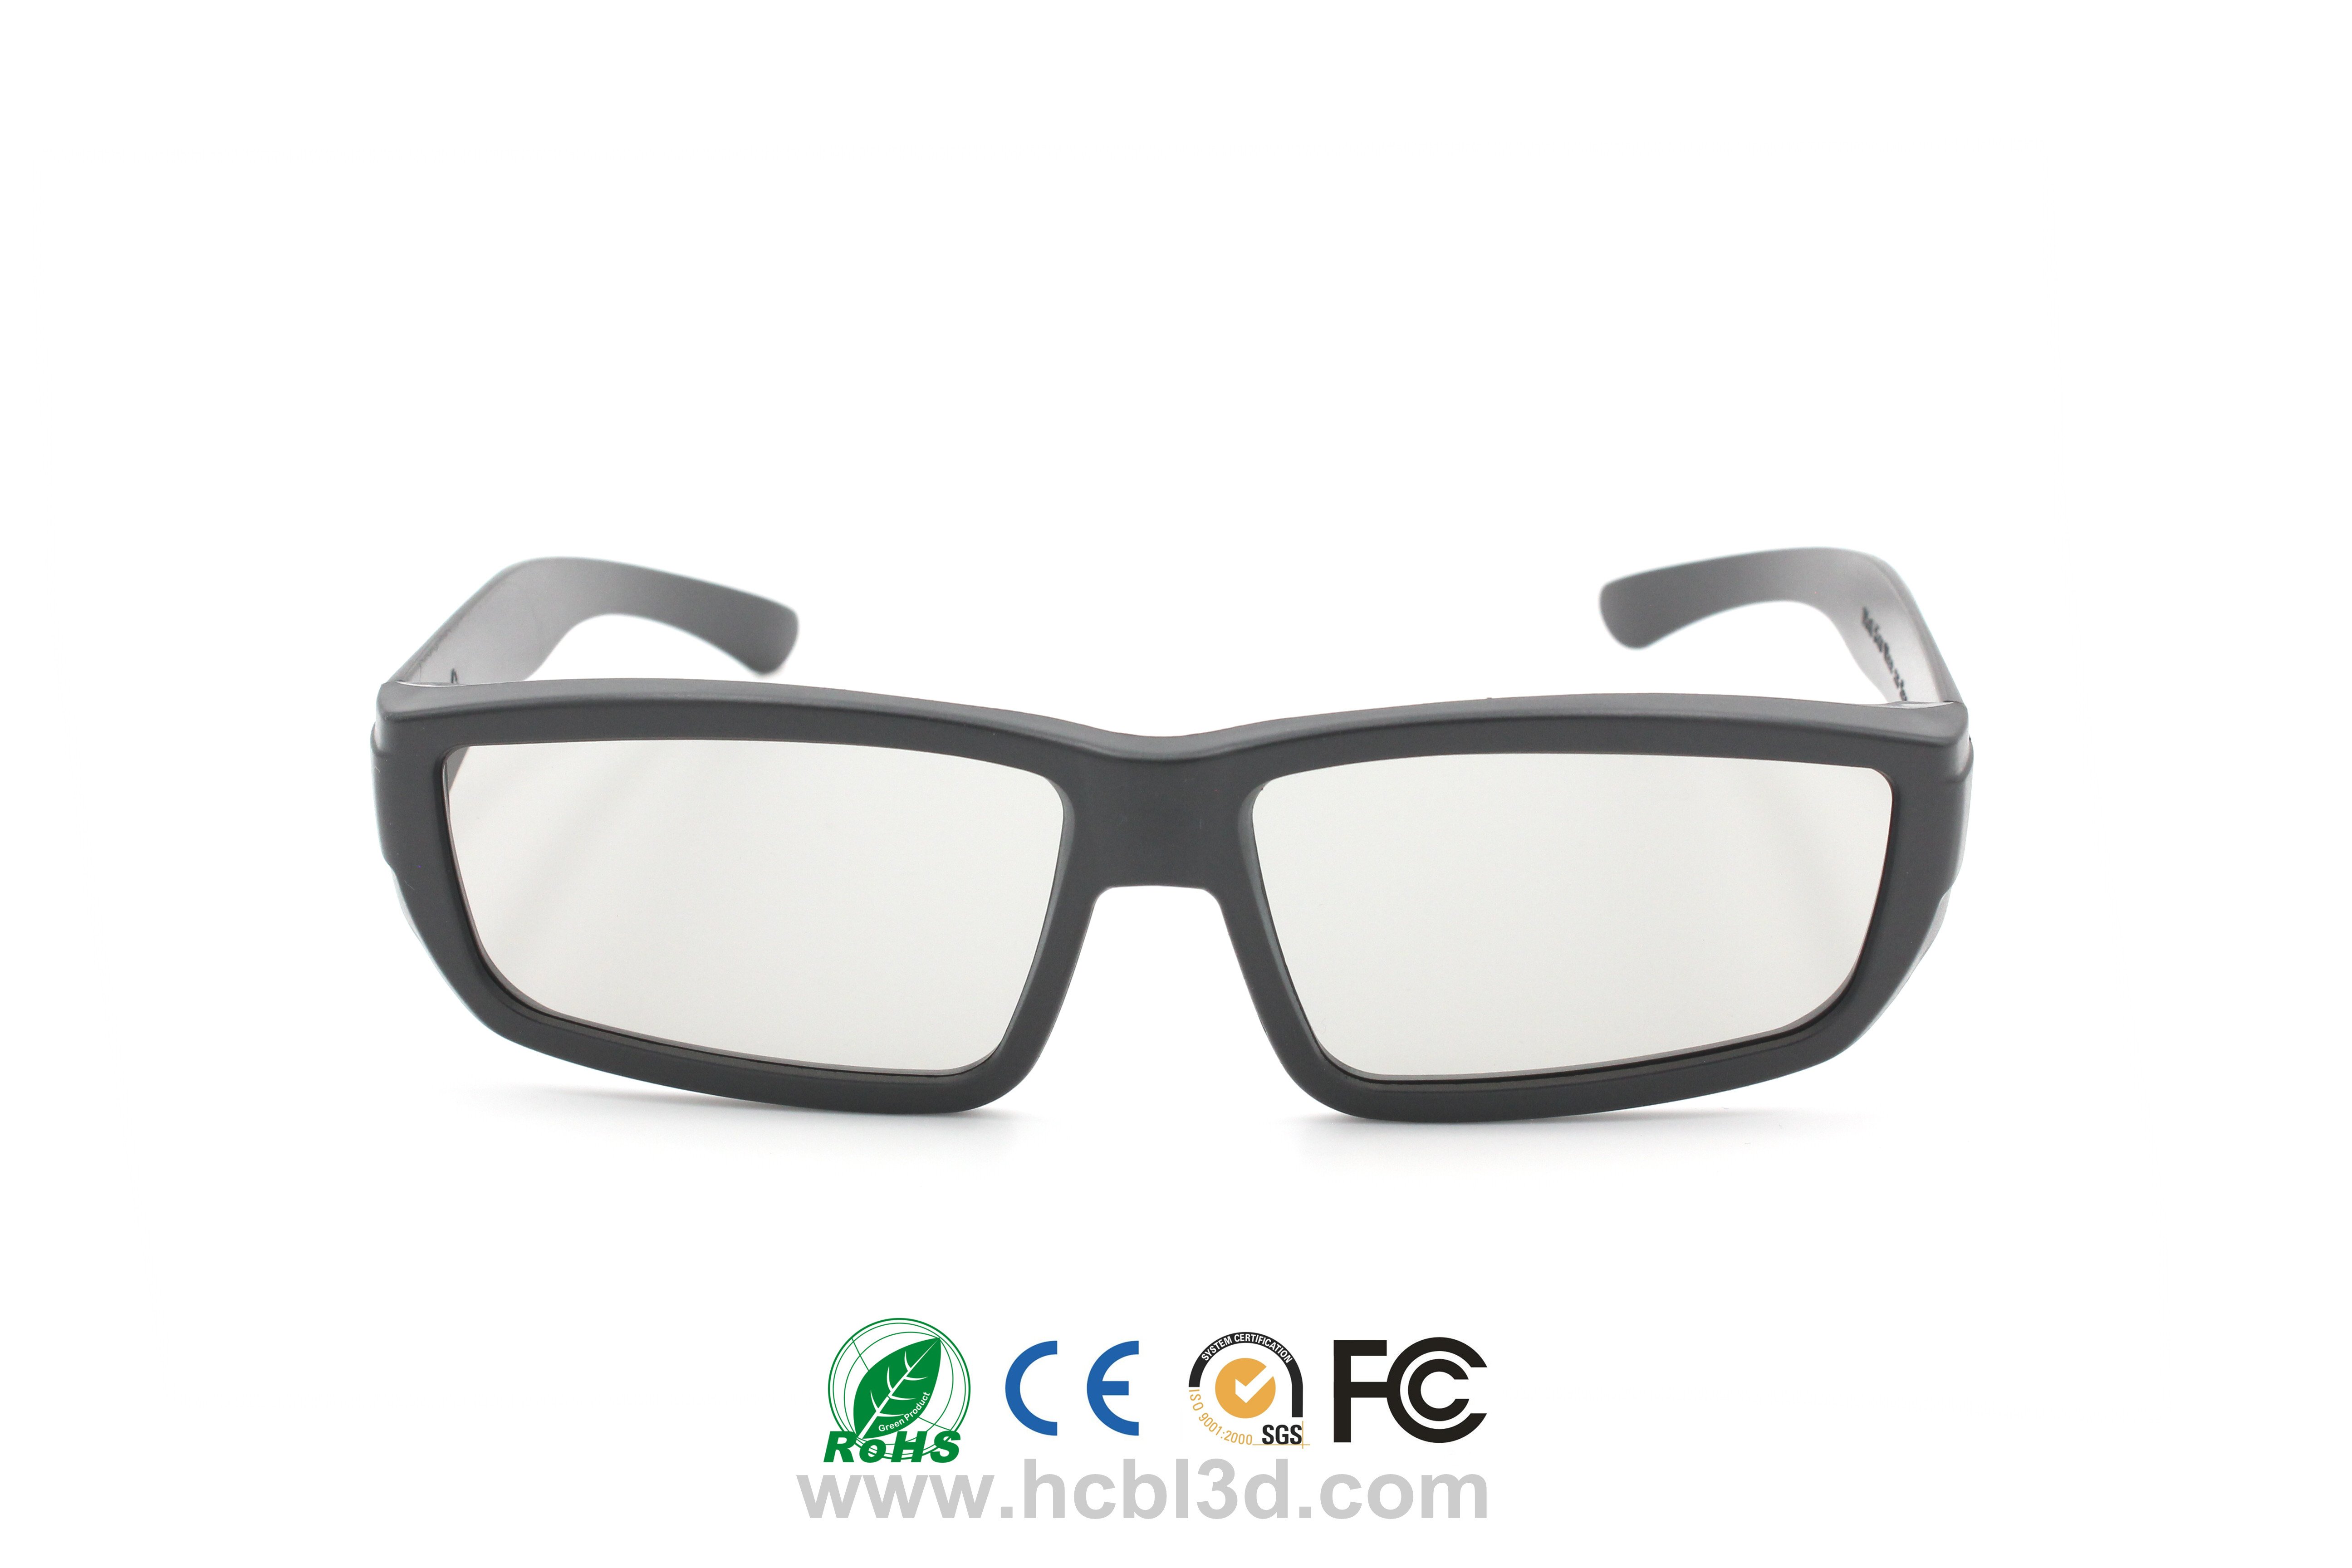 Passive 3D Glasses Plastic Frame for big screen format